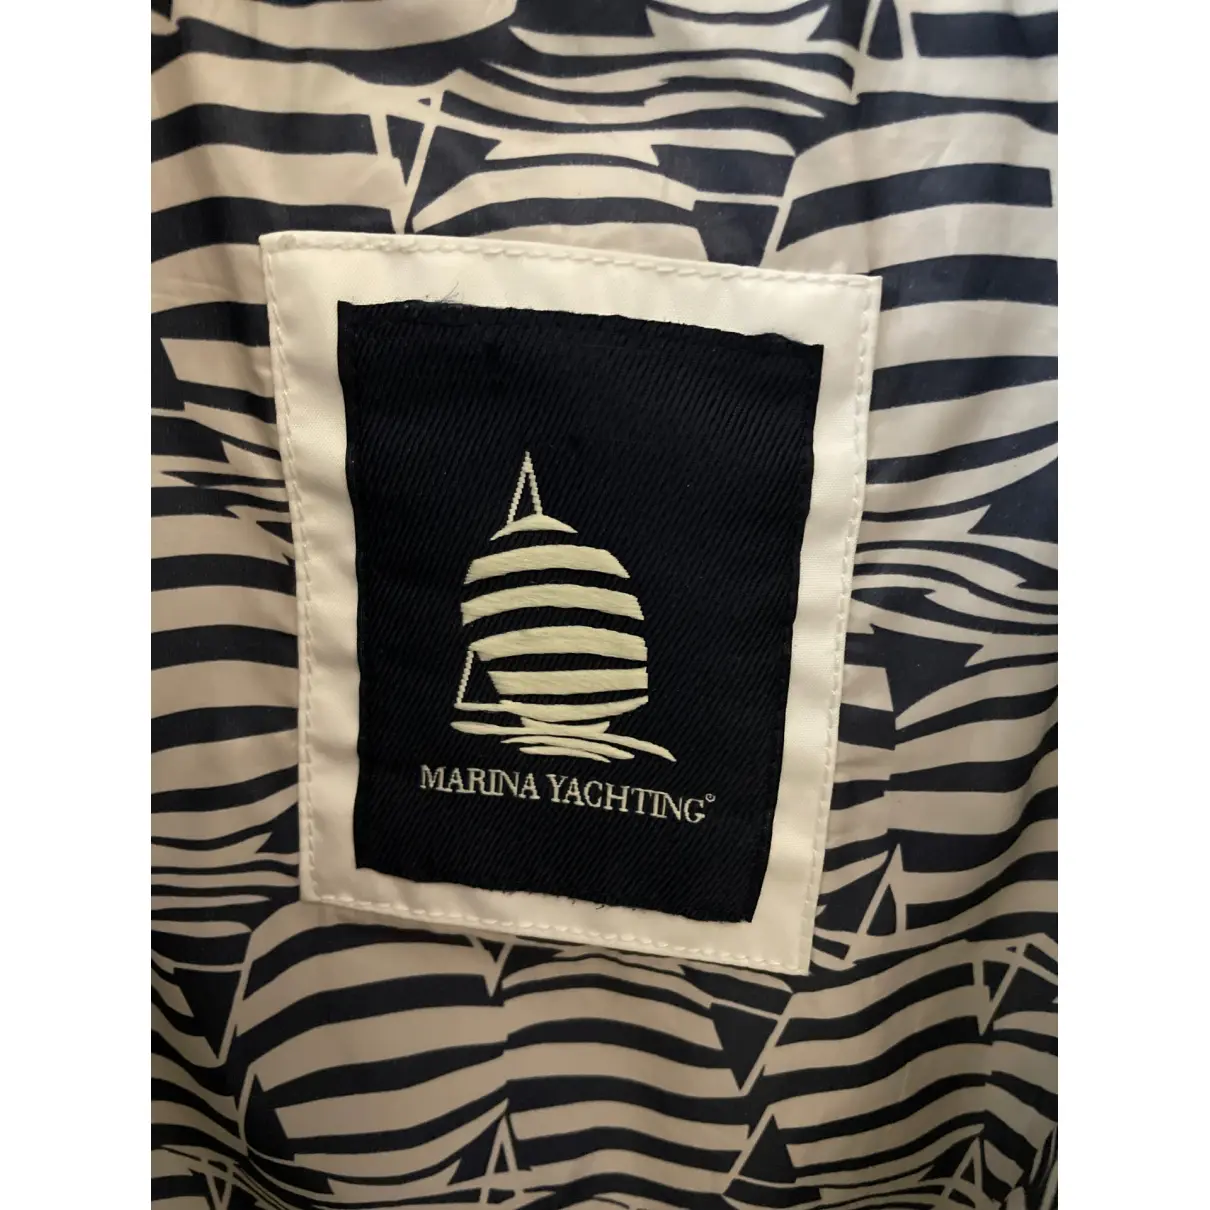 Buy Marina Yachting Jacket online